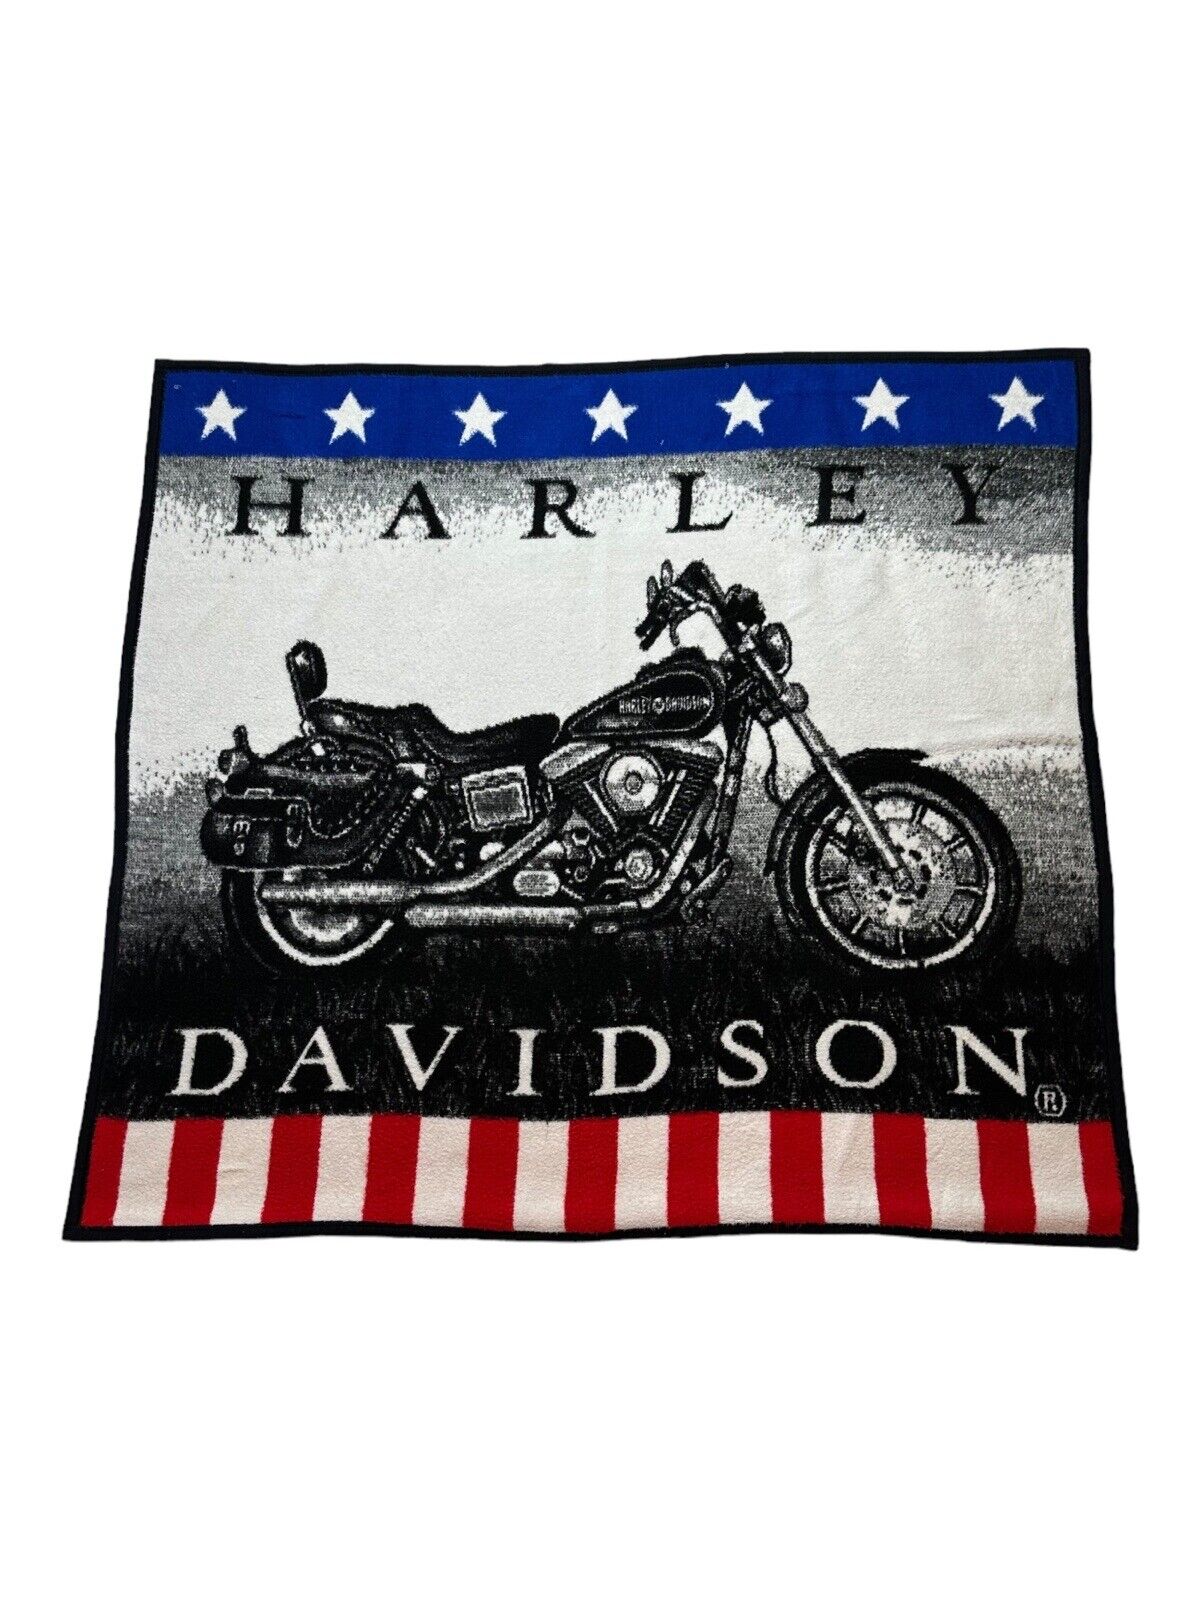 Biederlack Harley Davidson Throw Blanket 48x53 Inches Long Bike American Flag US